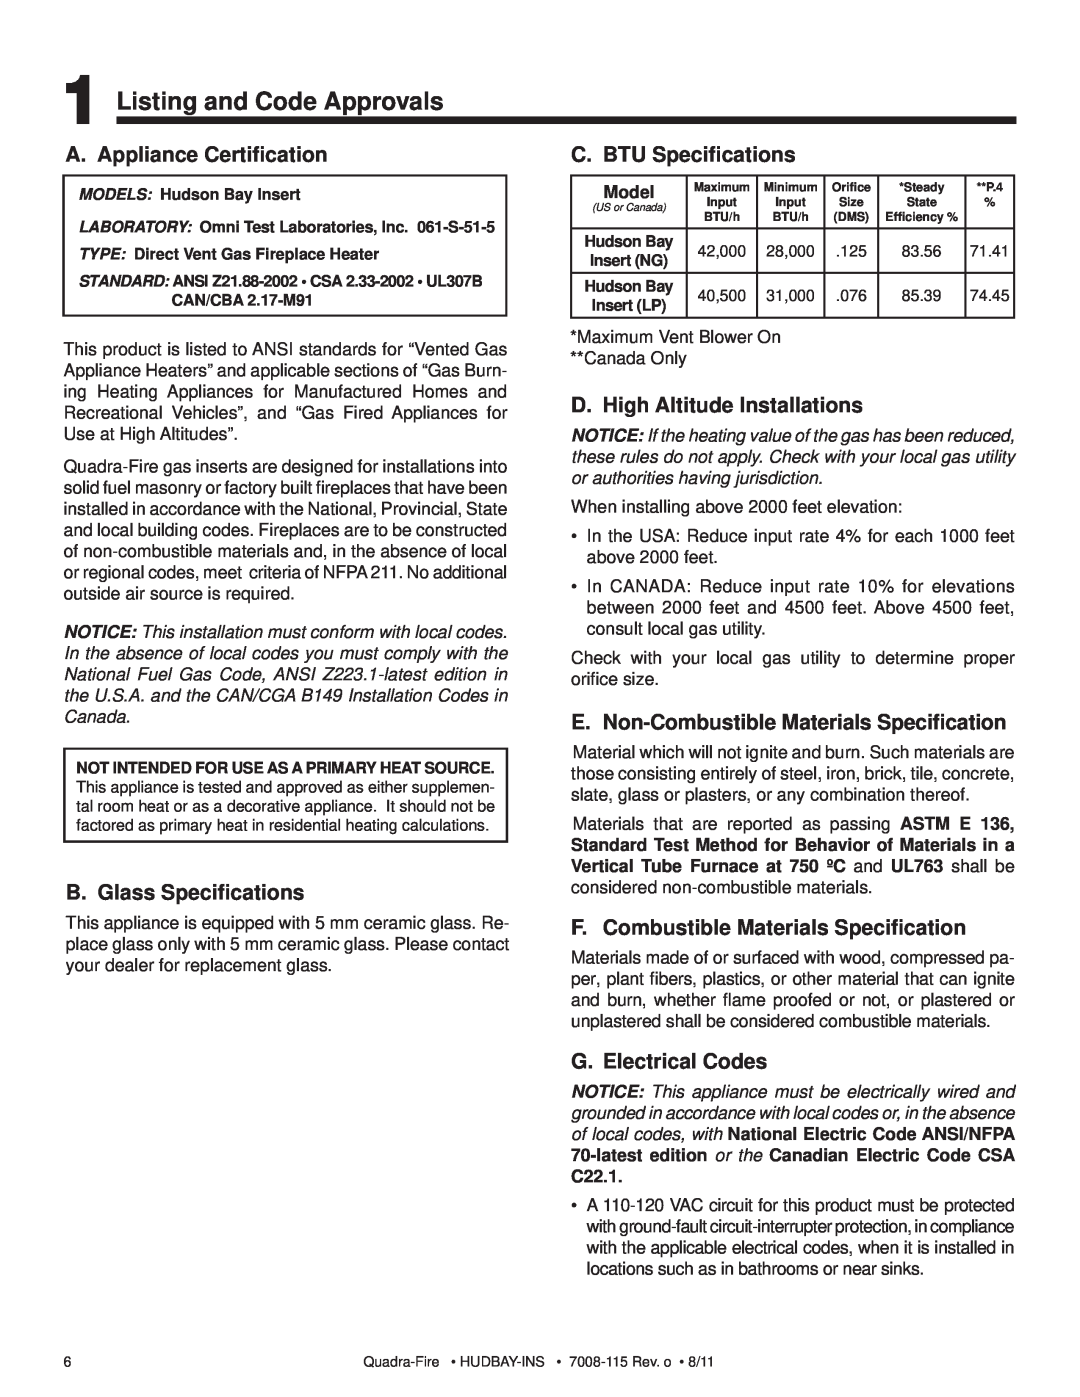 Quadra-Fire 7008-115 Listing and Code Approvals, A. Appliance Certiﬁcation, B. Glass Speciﬁcations, C. BTU Speciﬁcations 